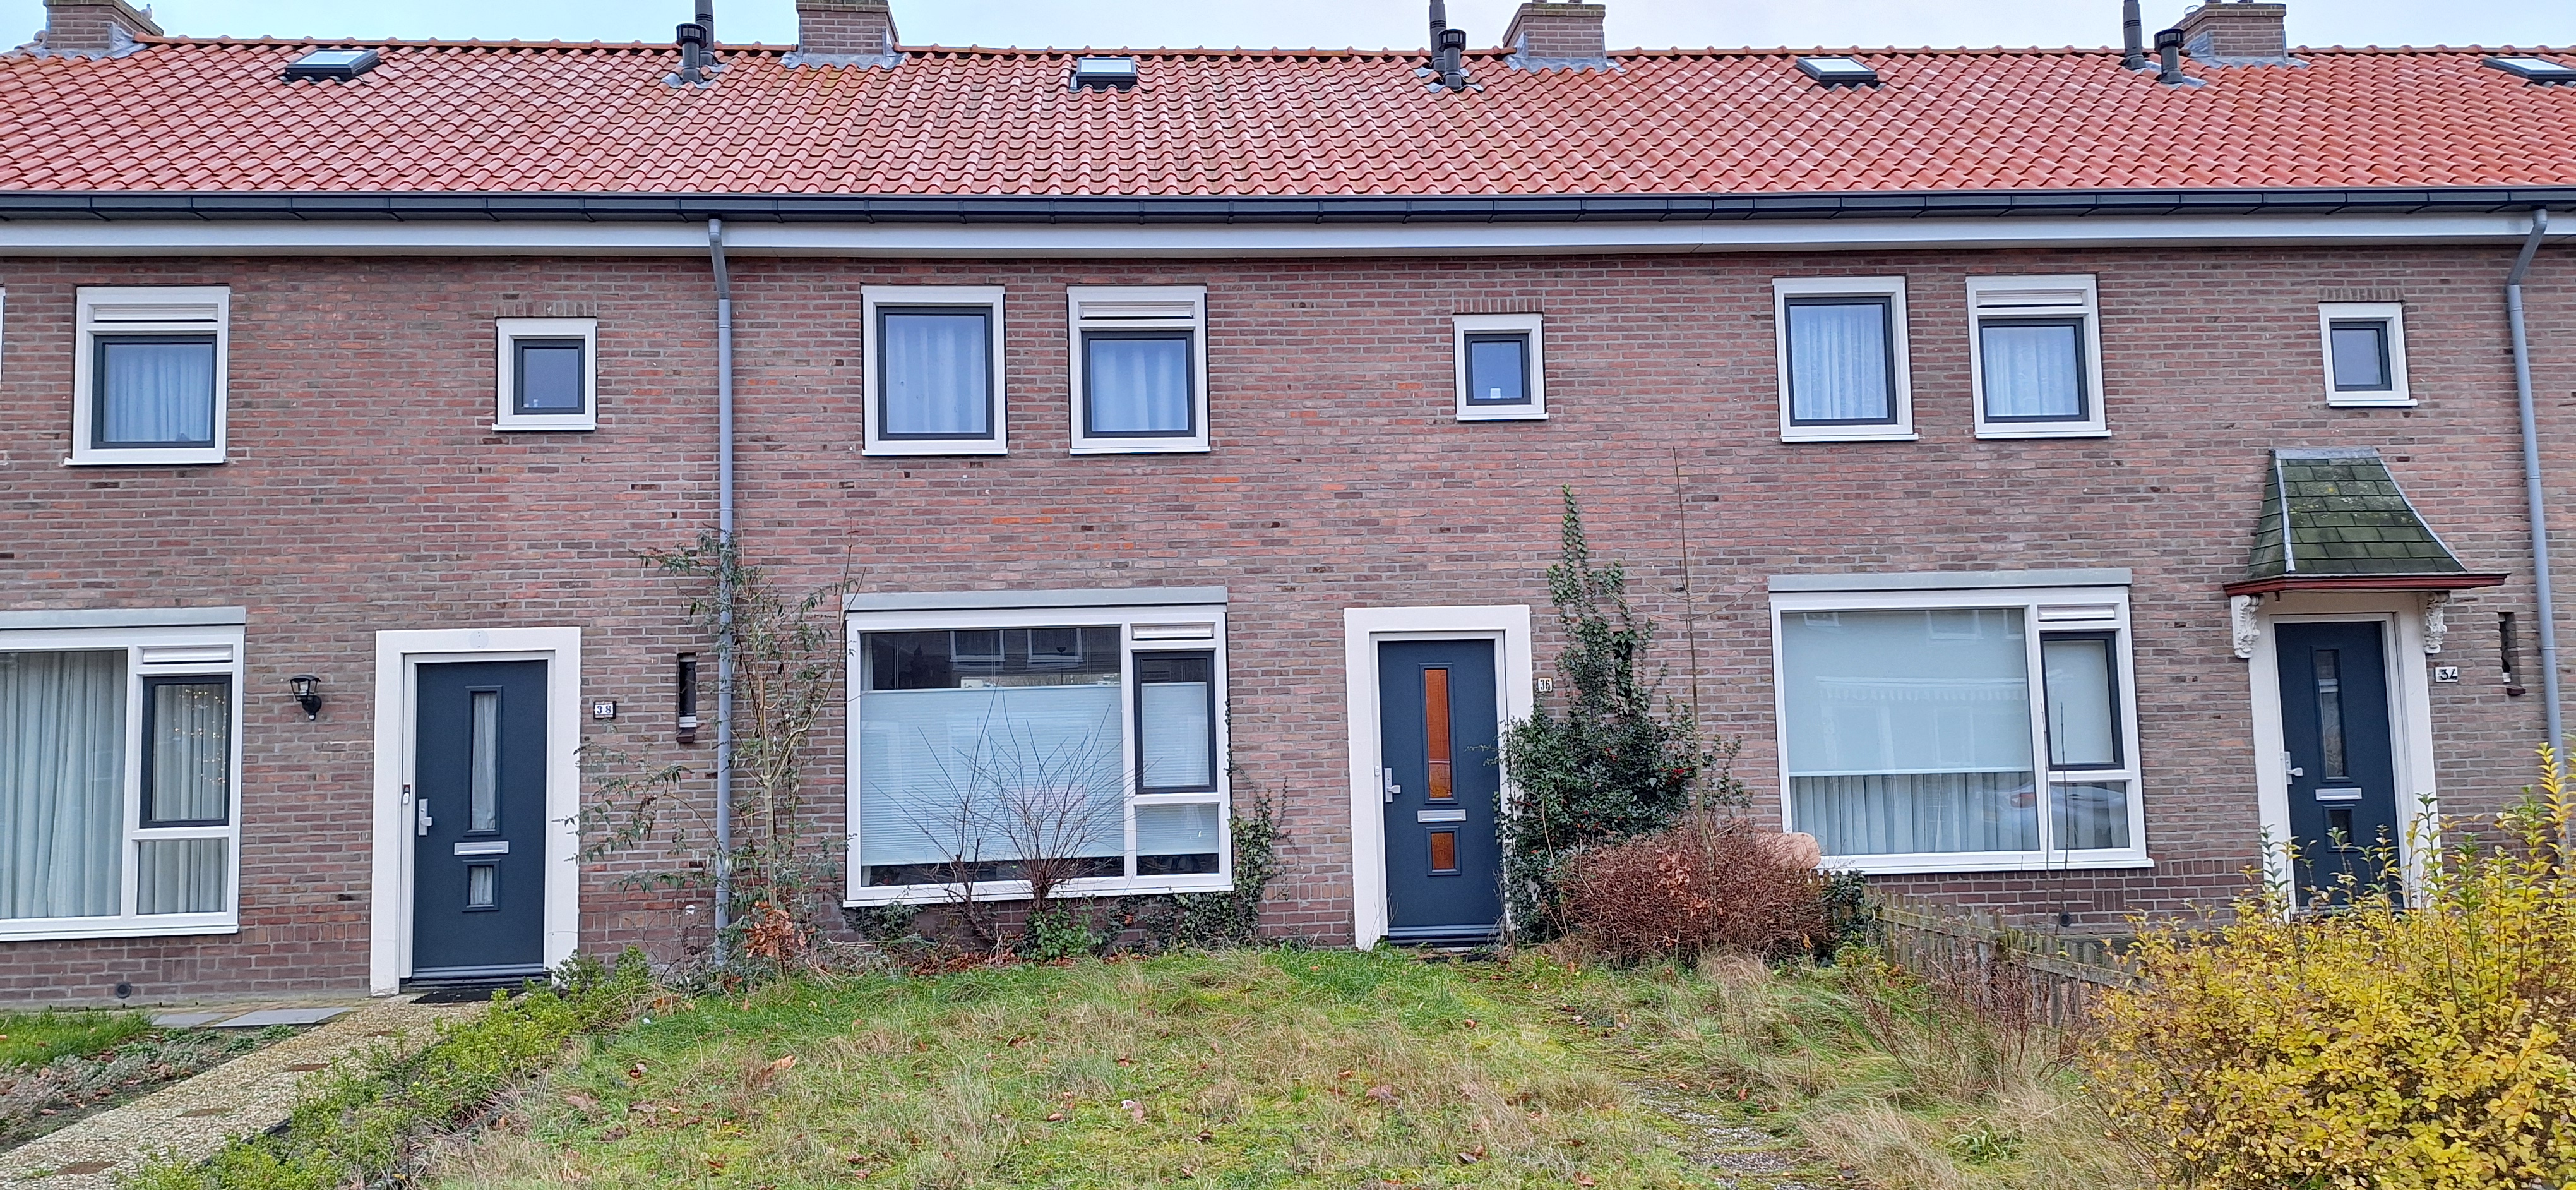 Van Halllaan 36, 3843 WR Harderwijk, Nederland